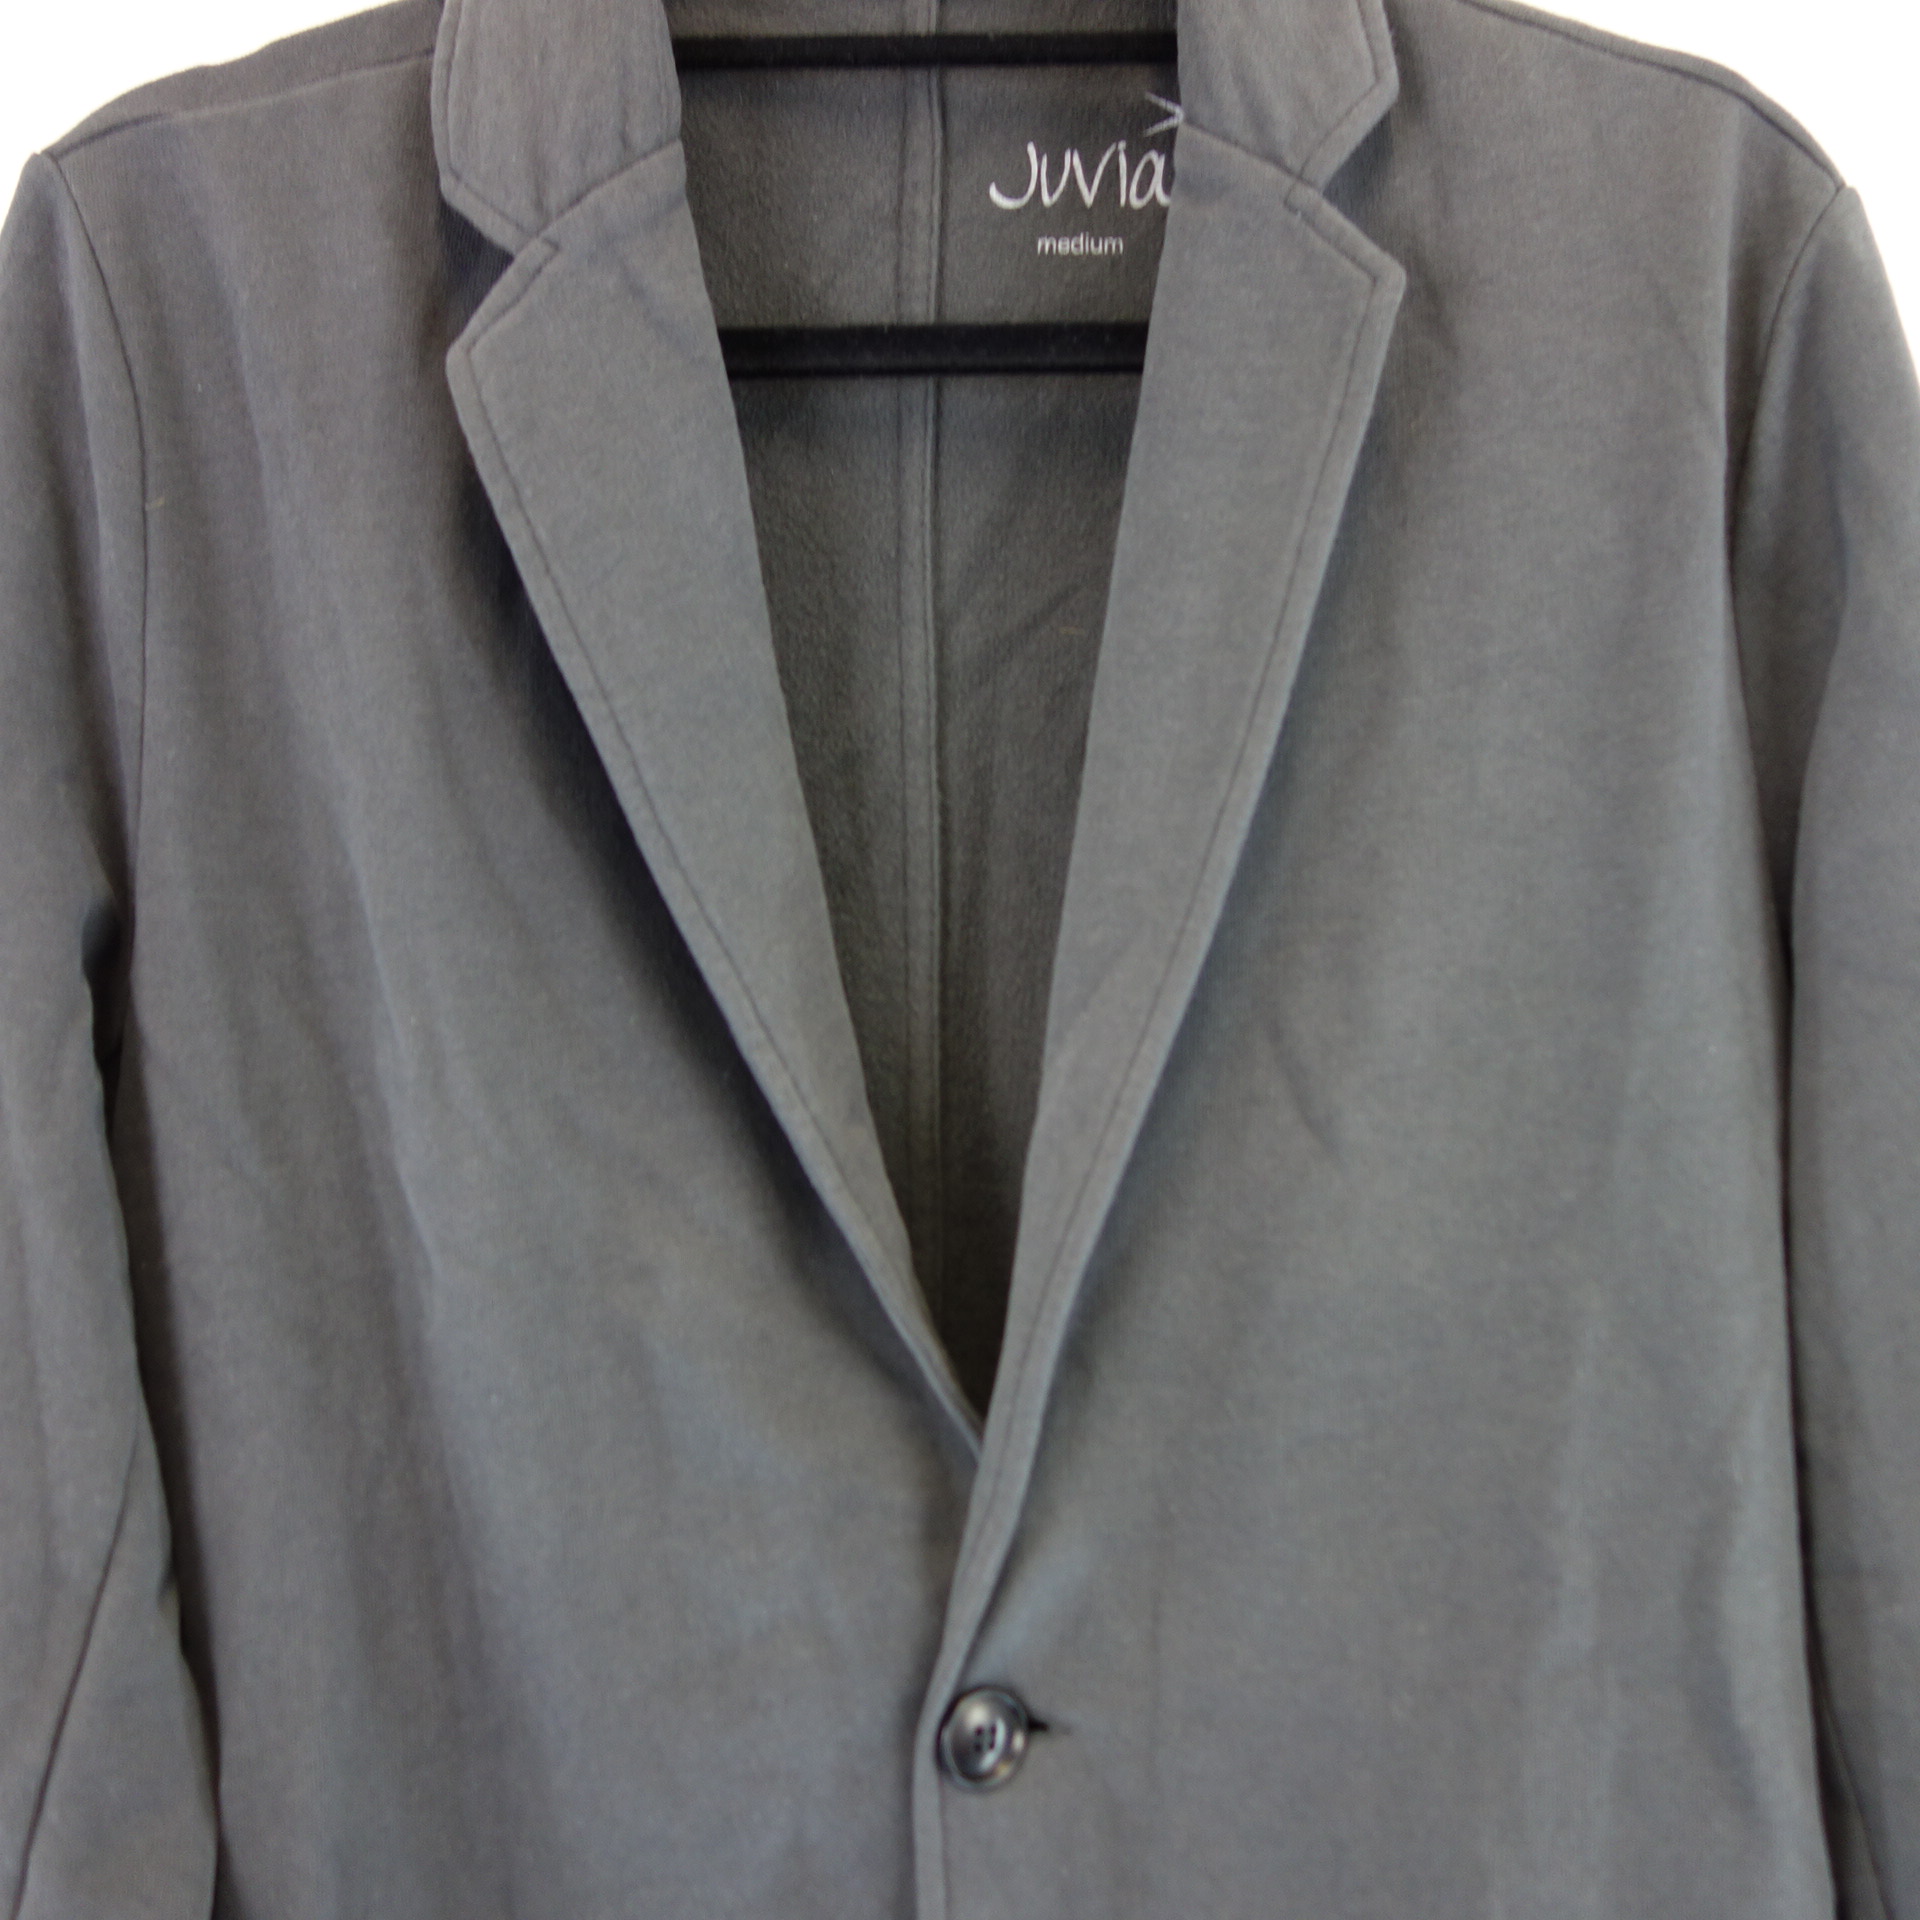 JUVIA Herren Jacke Herrenjacke Sweat Sweatjacke Jersey Sakko Style Grau Größe M